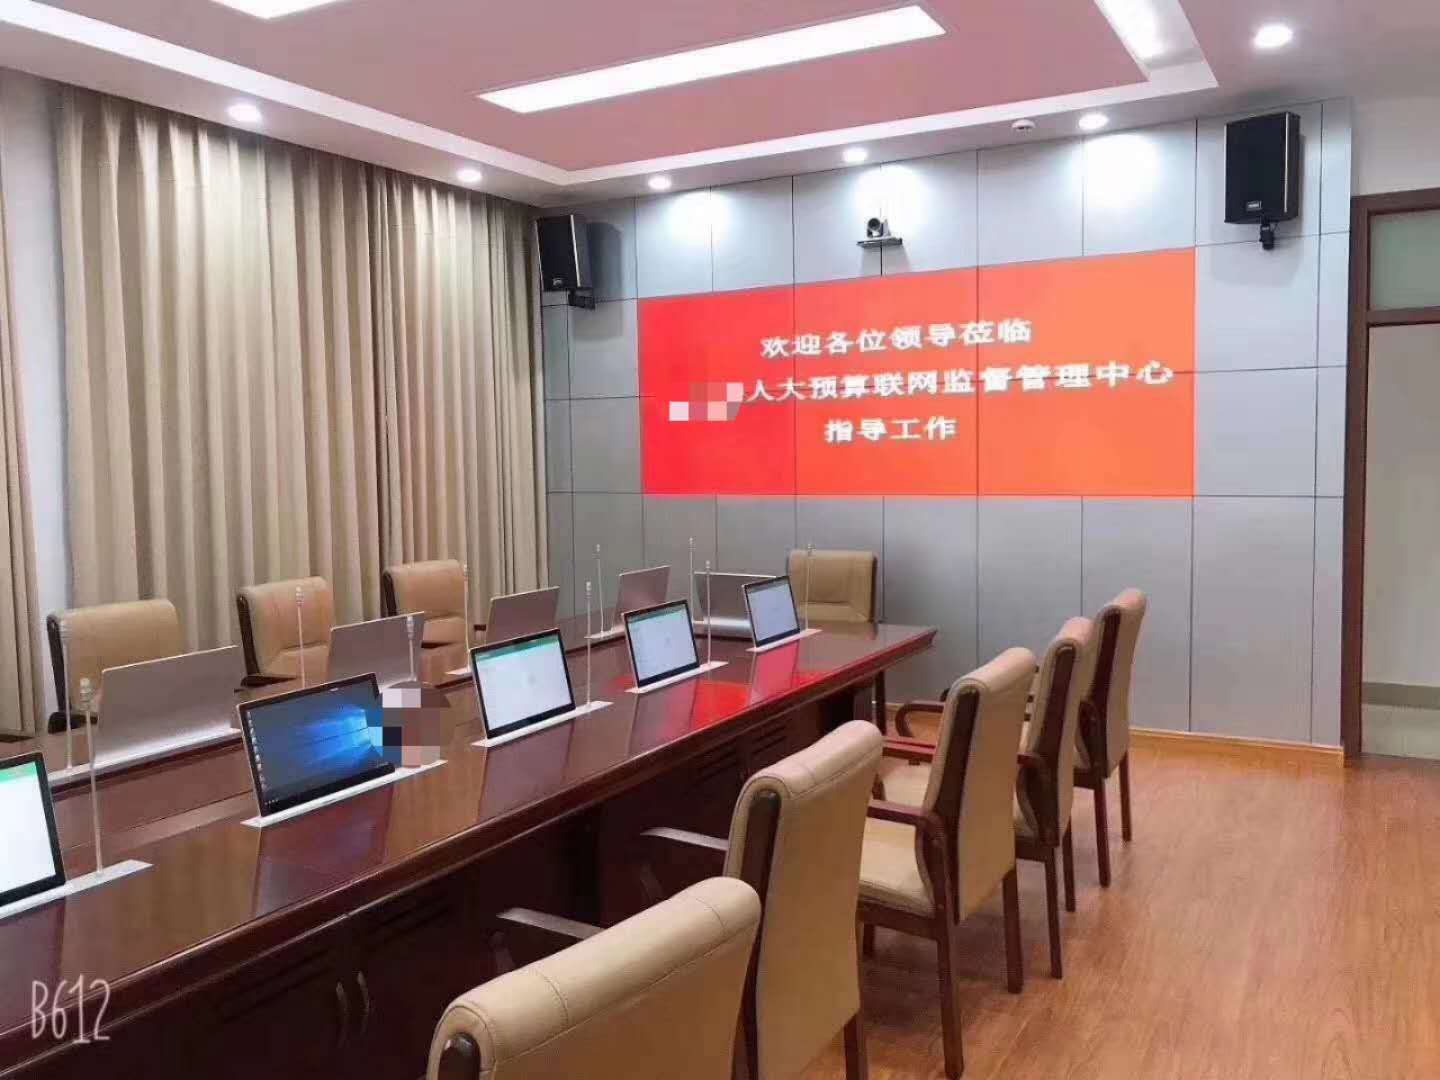 UEDA上田无纸化会议系统成功应用于郑州市某人大会议室